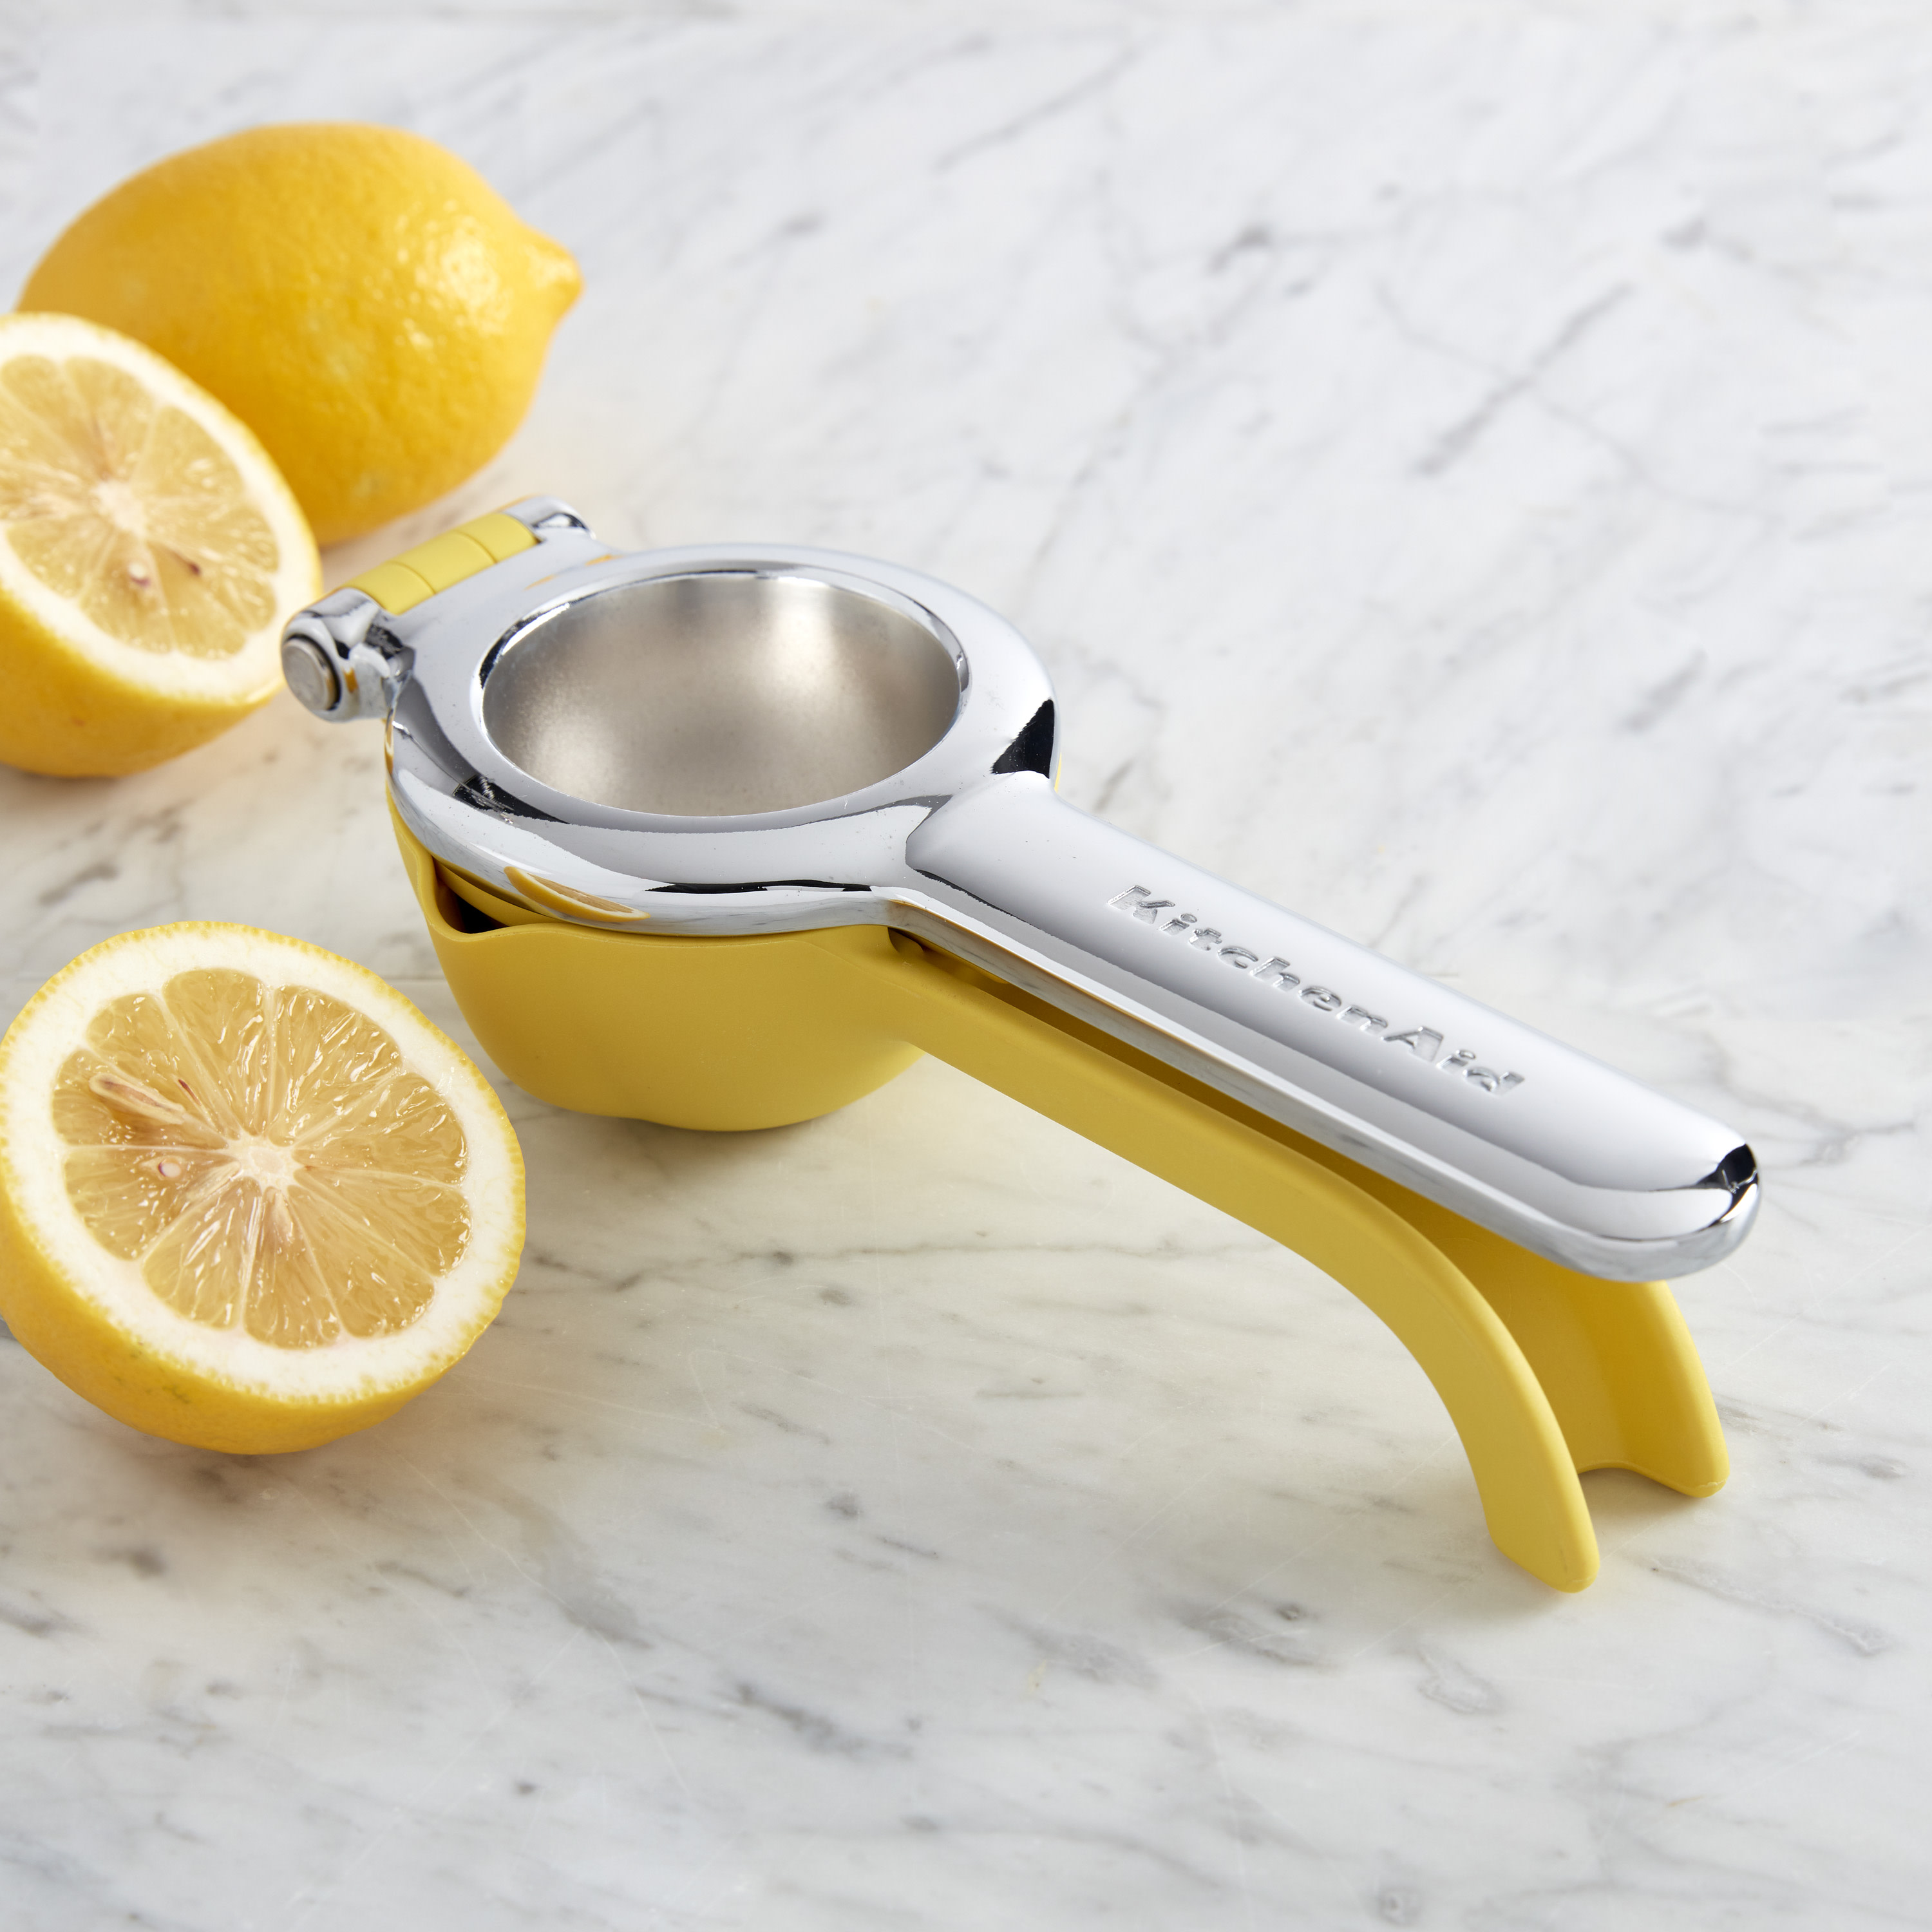 Kitchenaid No Mess Citrus Press Meyer Lemon - image 3 of 17